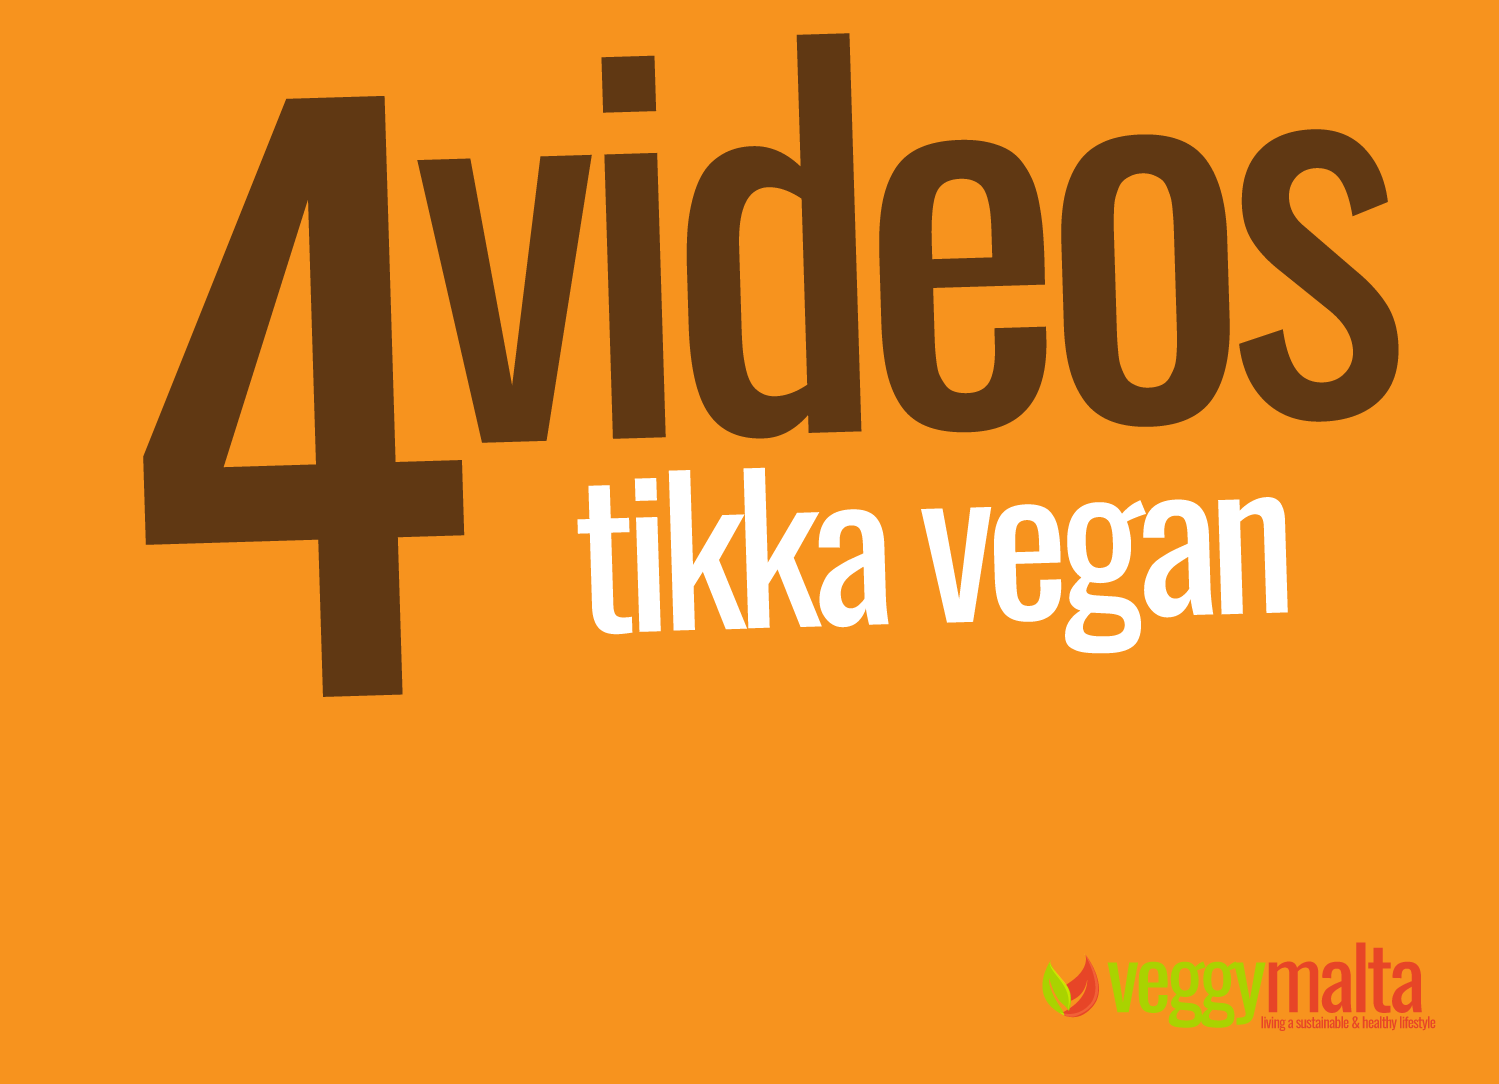 4-videos-tikka-vegan